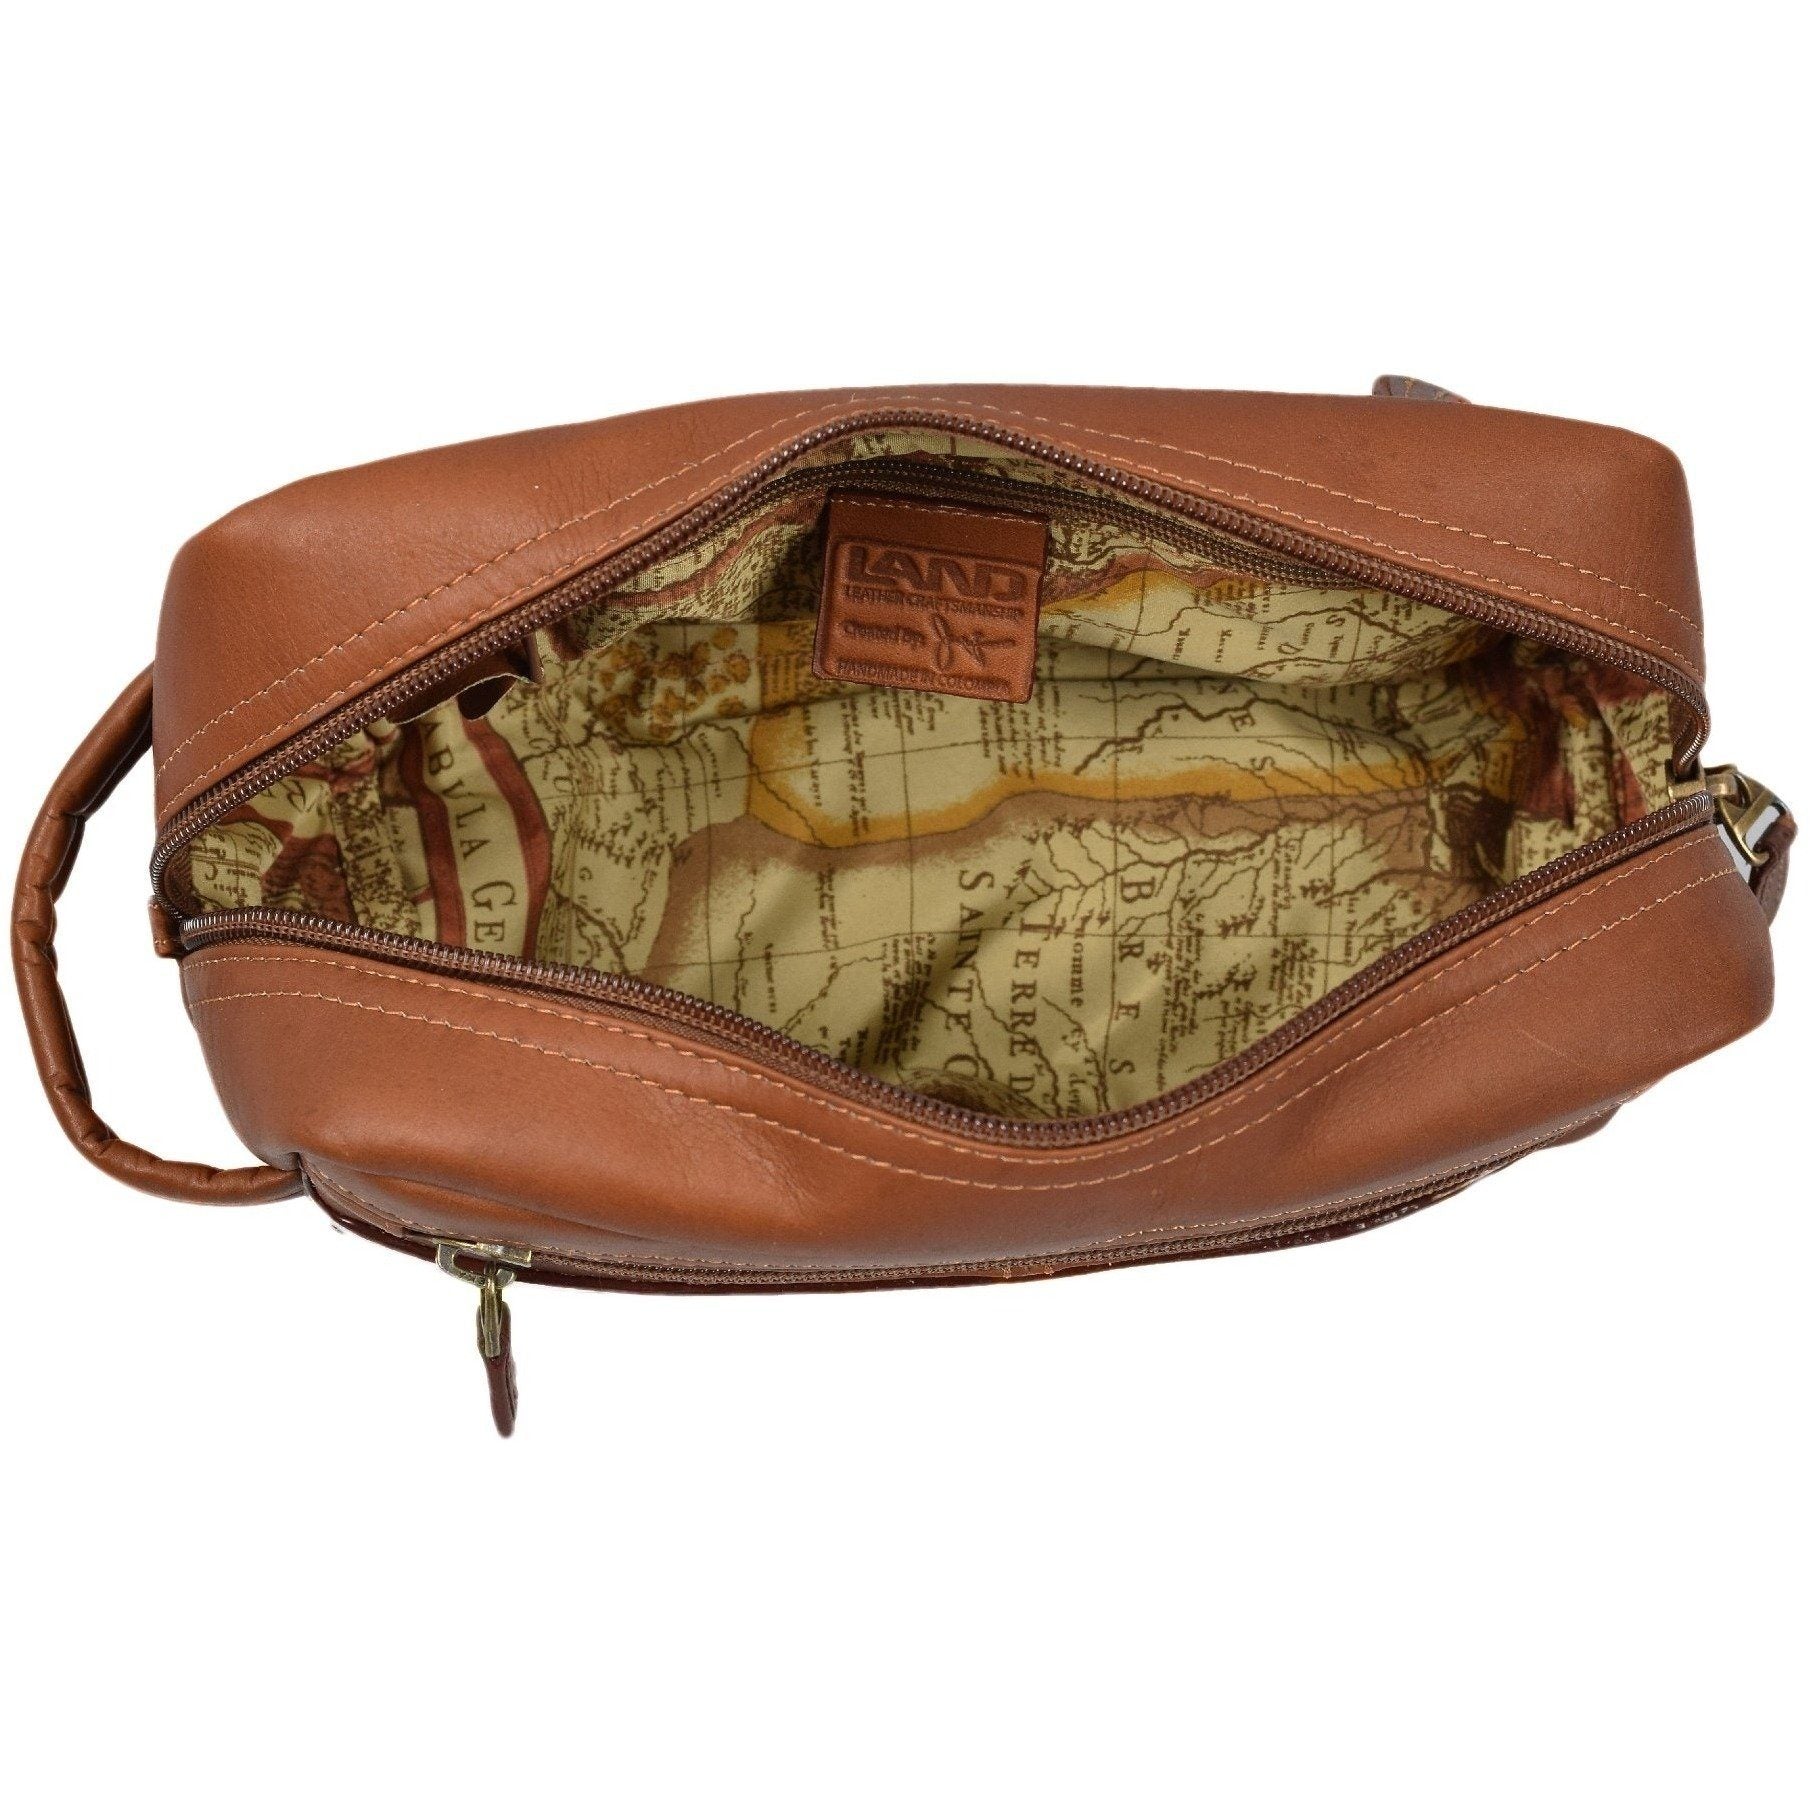 Santa Fe Dopp Kit, Toiletry Bag | LAND Leather